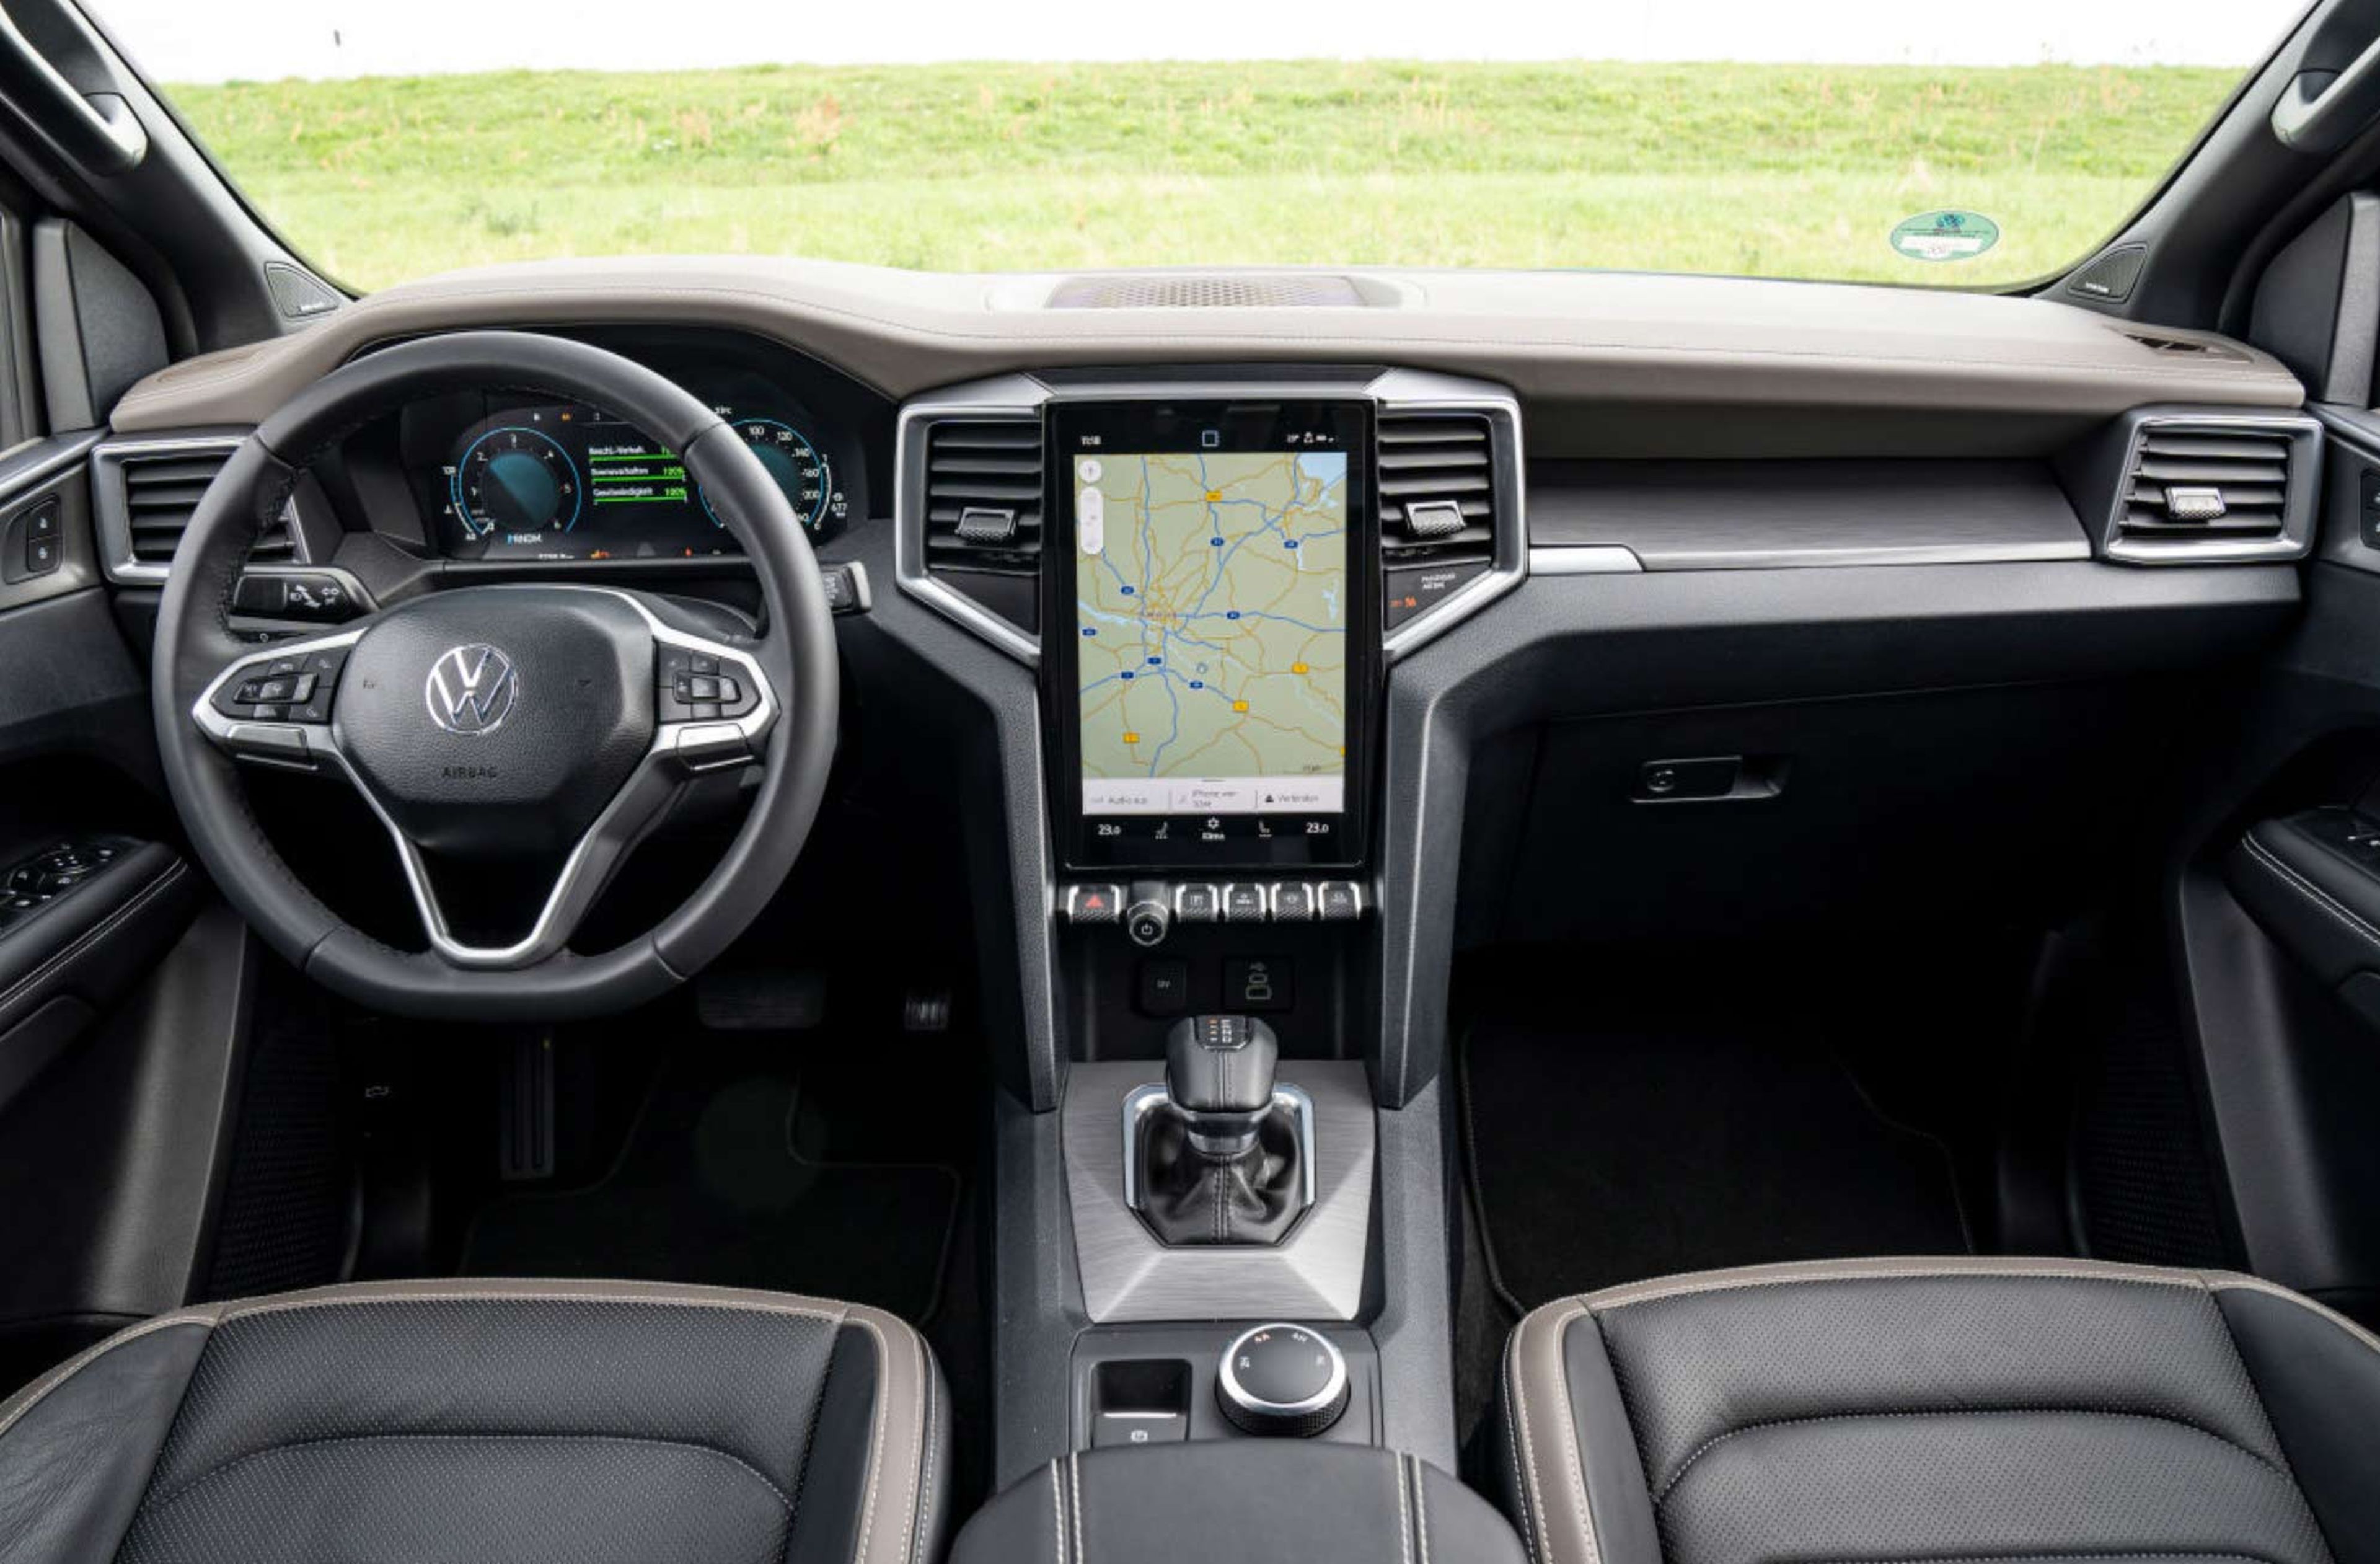 Comparativa: Ford Ranger vs Volkswagen Amarok cockpit